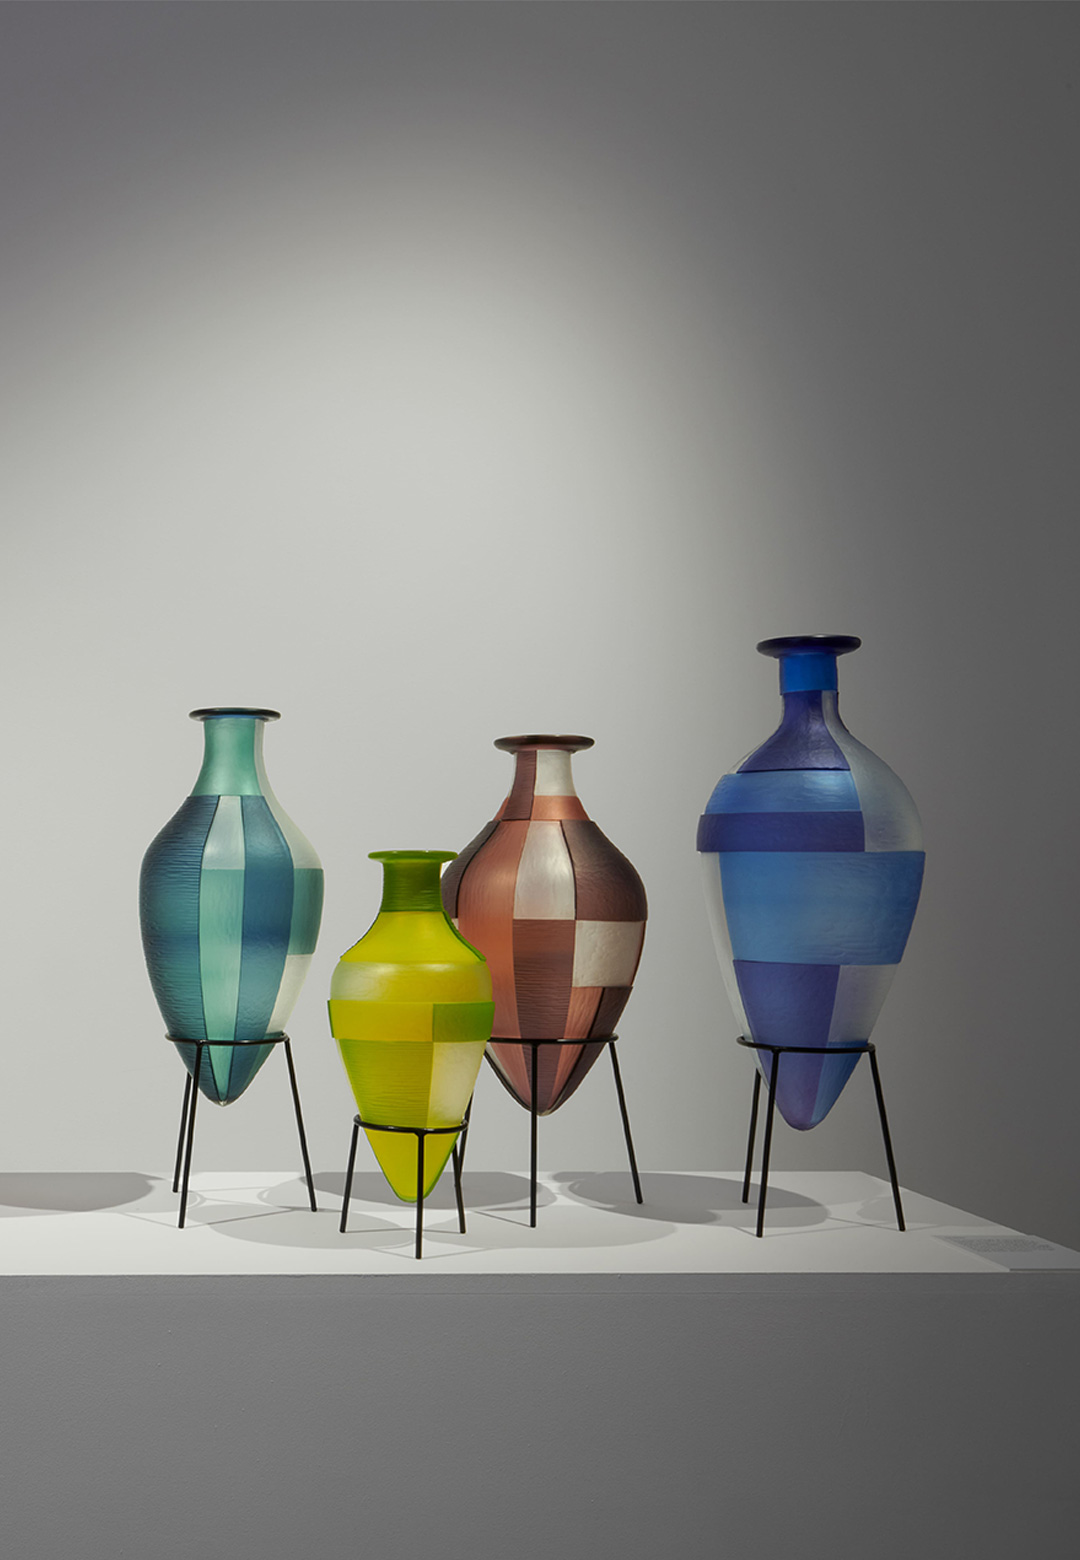 Monica Guggisberg & Philip Baldwin's latest exhibition explores ancient amphoras